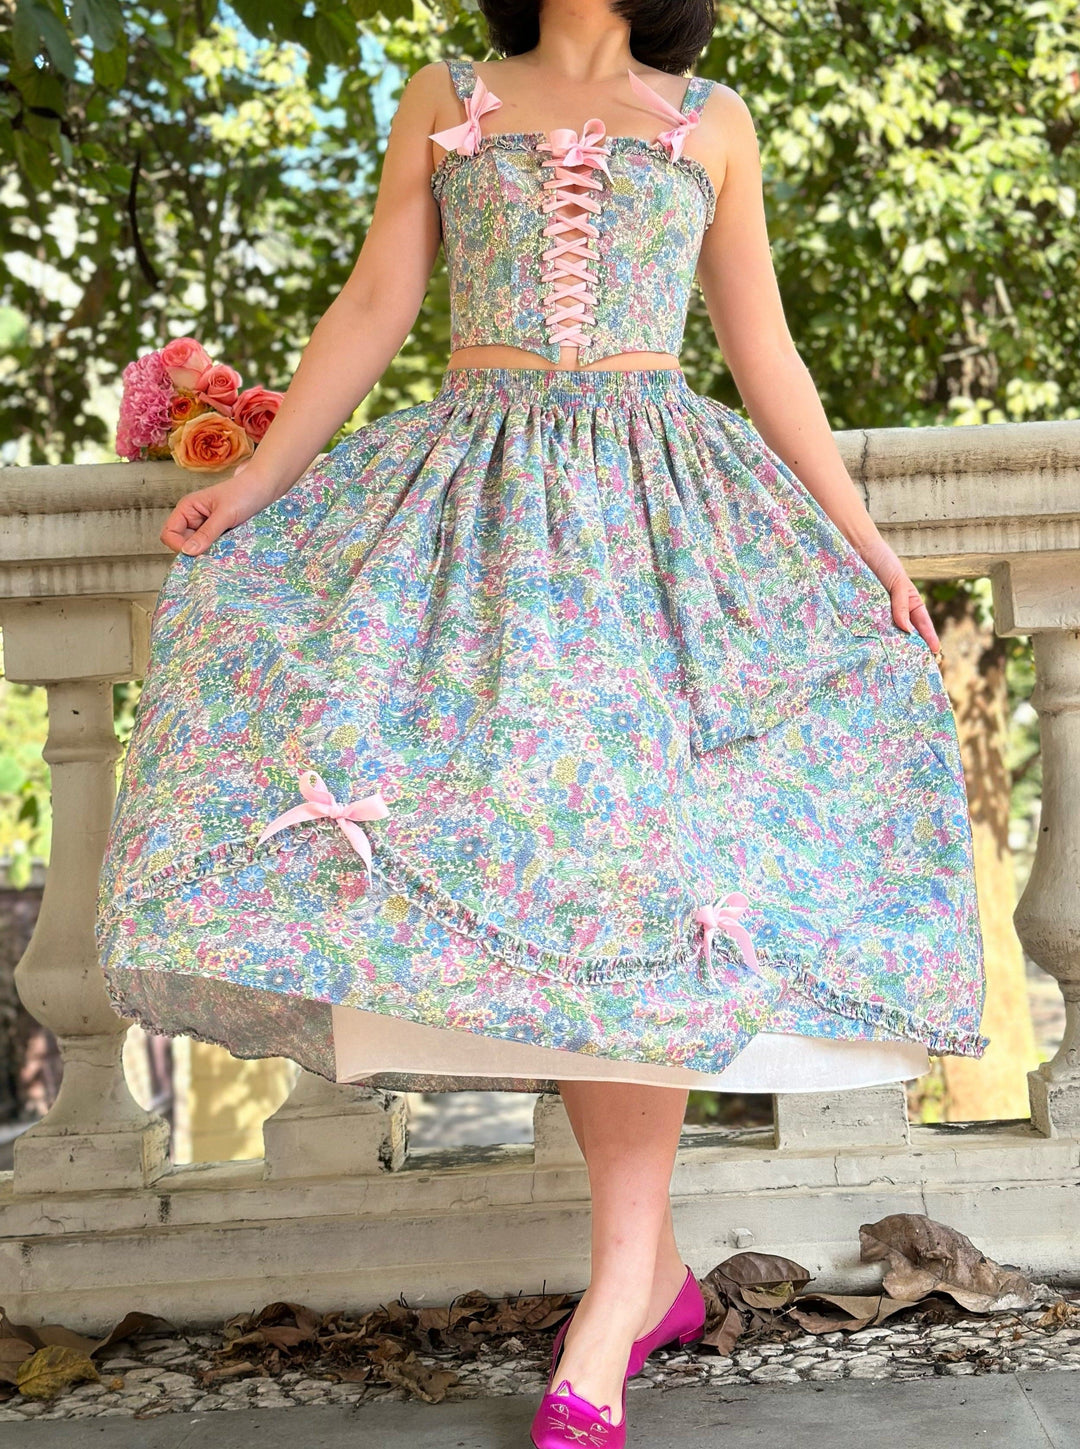 Fairy Tong Skirt Wild Meadow Magic Midi Skirt - Pastel